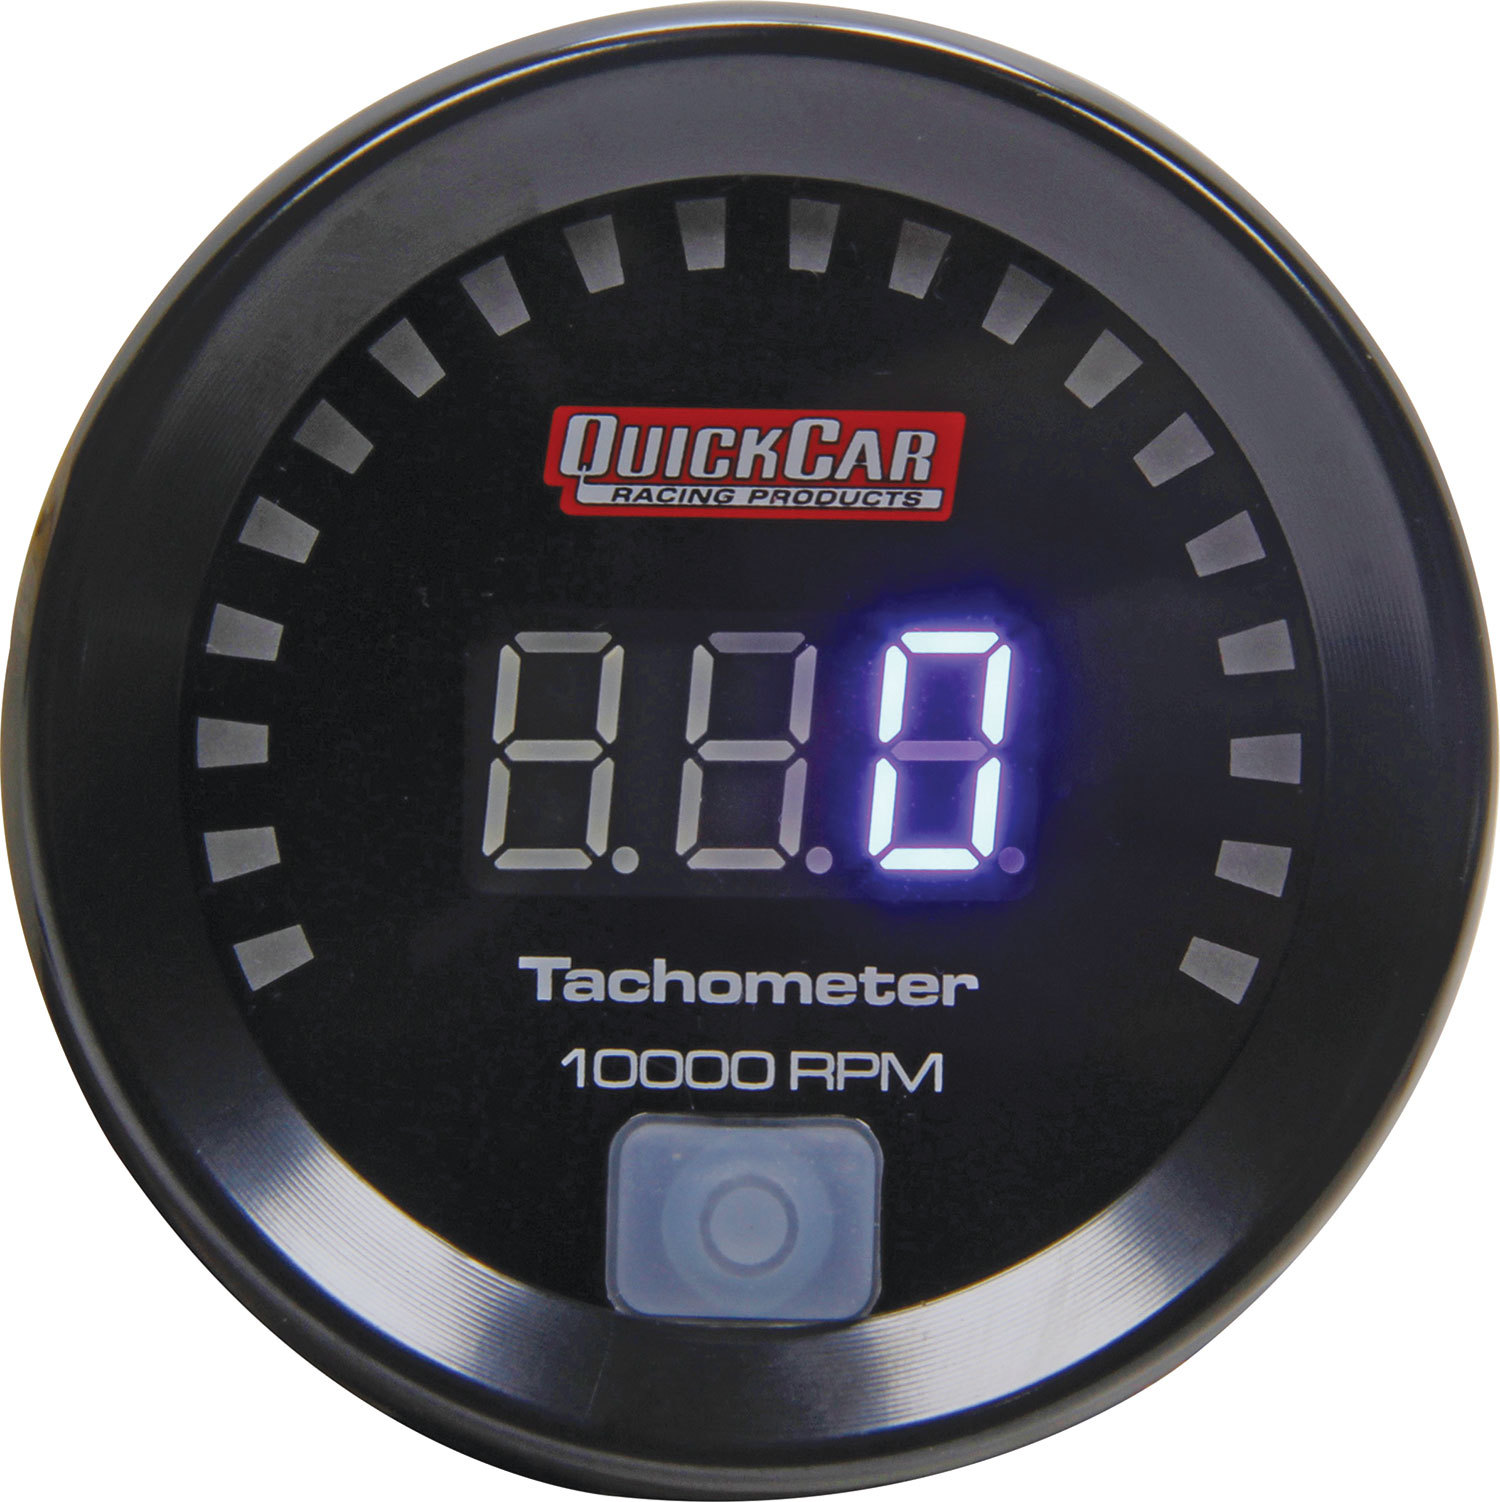 Tachometer digital